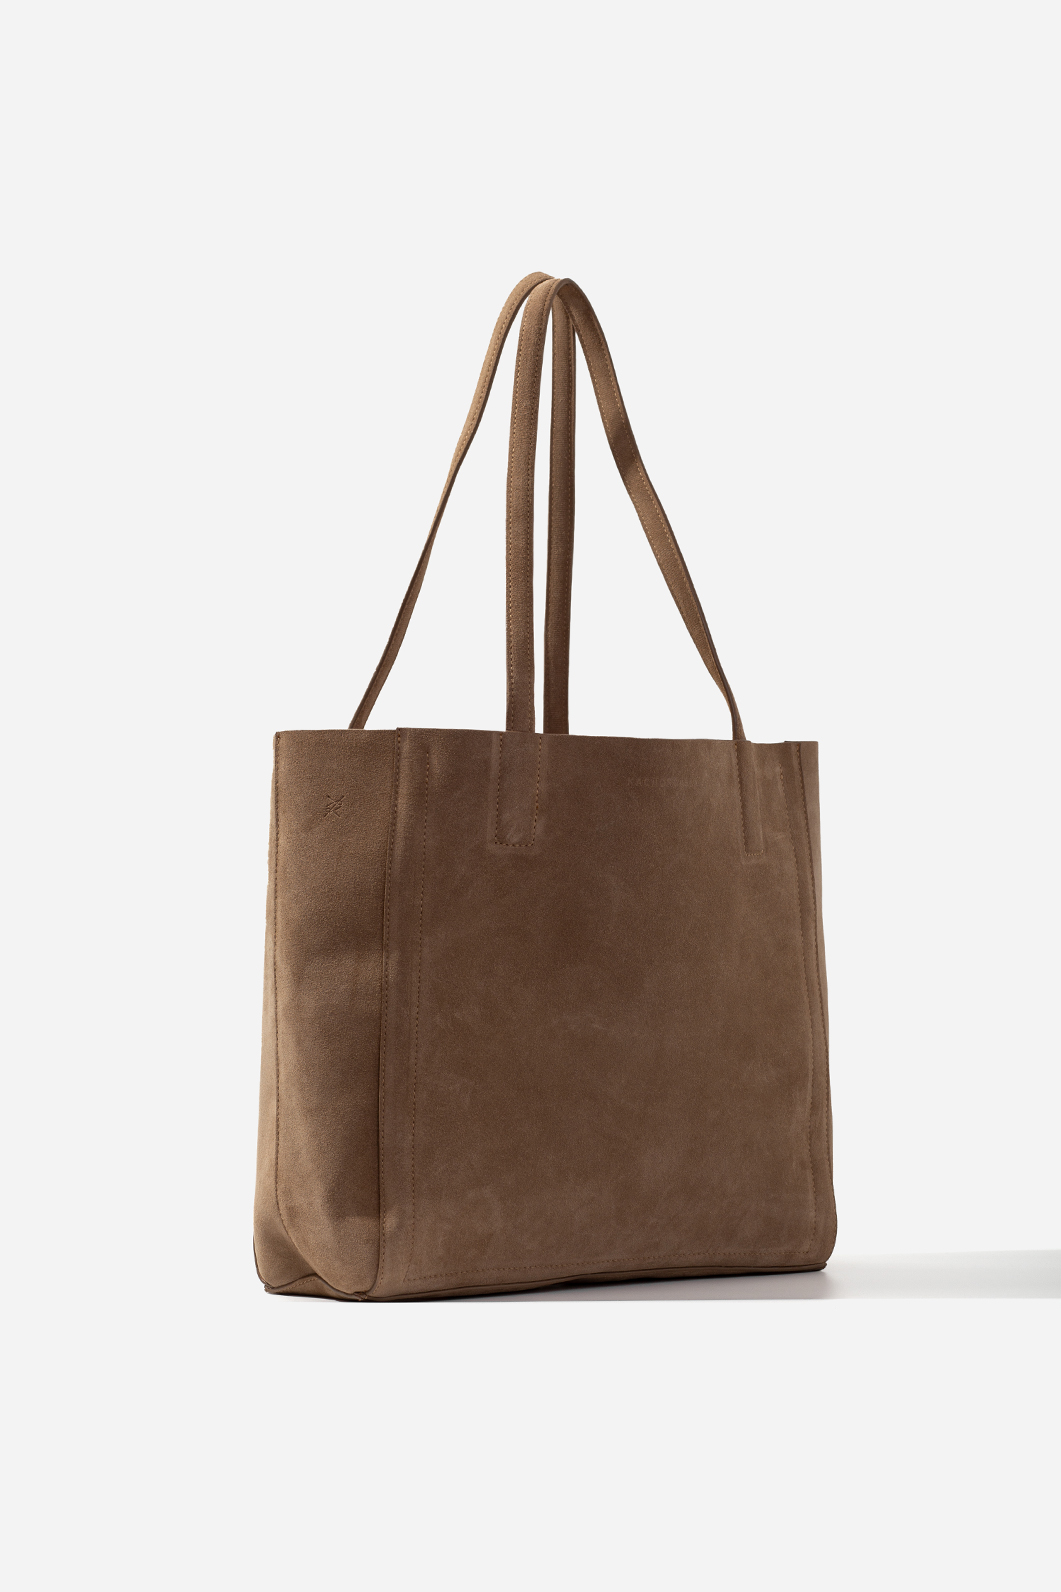 Sarah mini light brown suede shopper bag /gold/